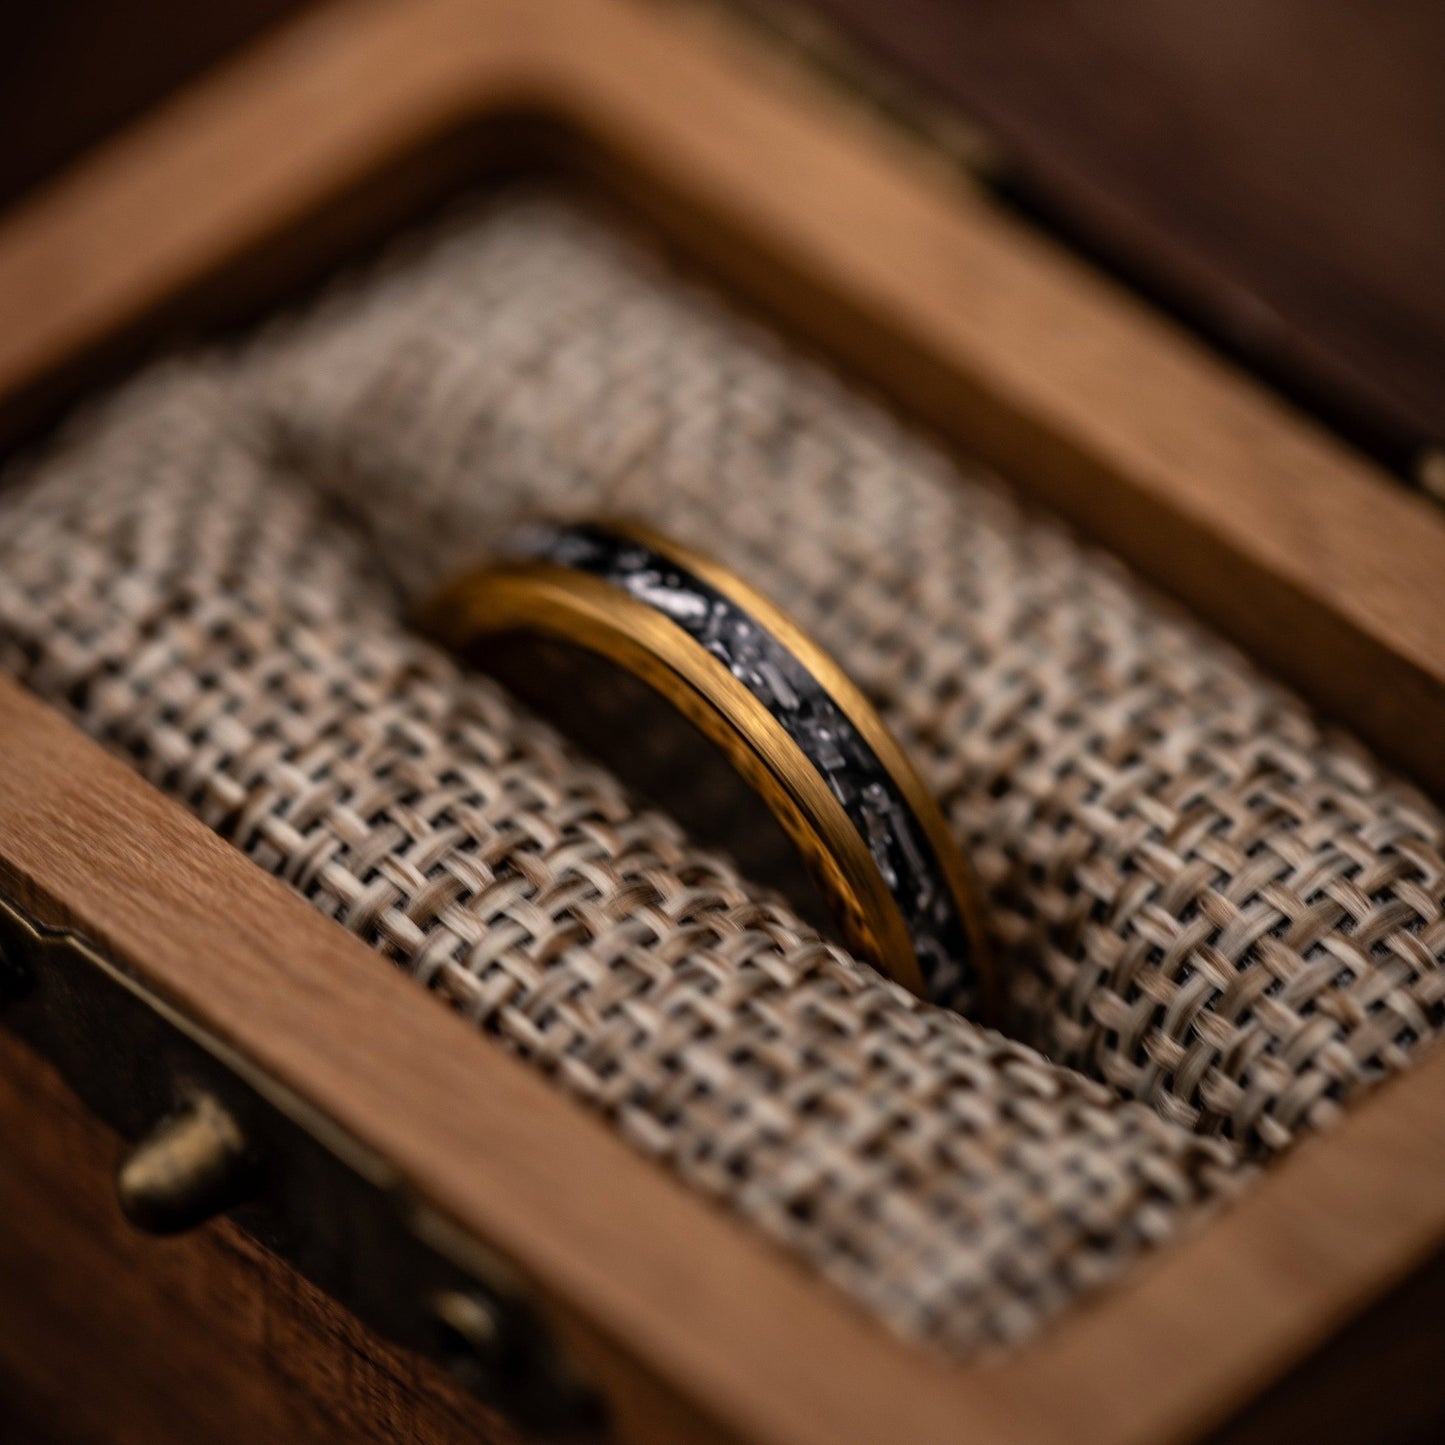 His & Hers Gold & Meteorite Wedding Ring Set